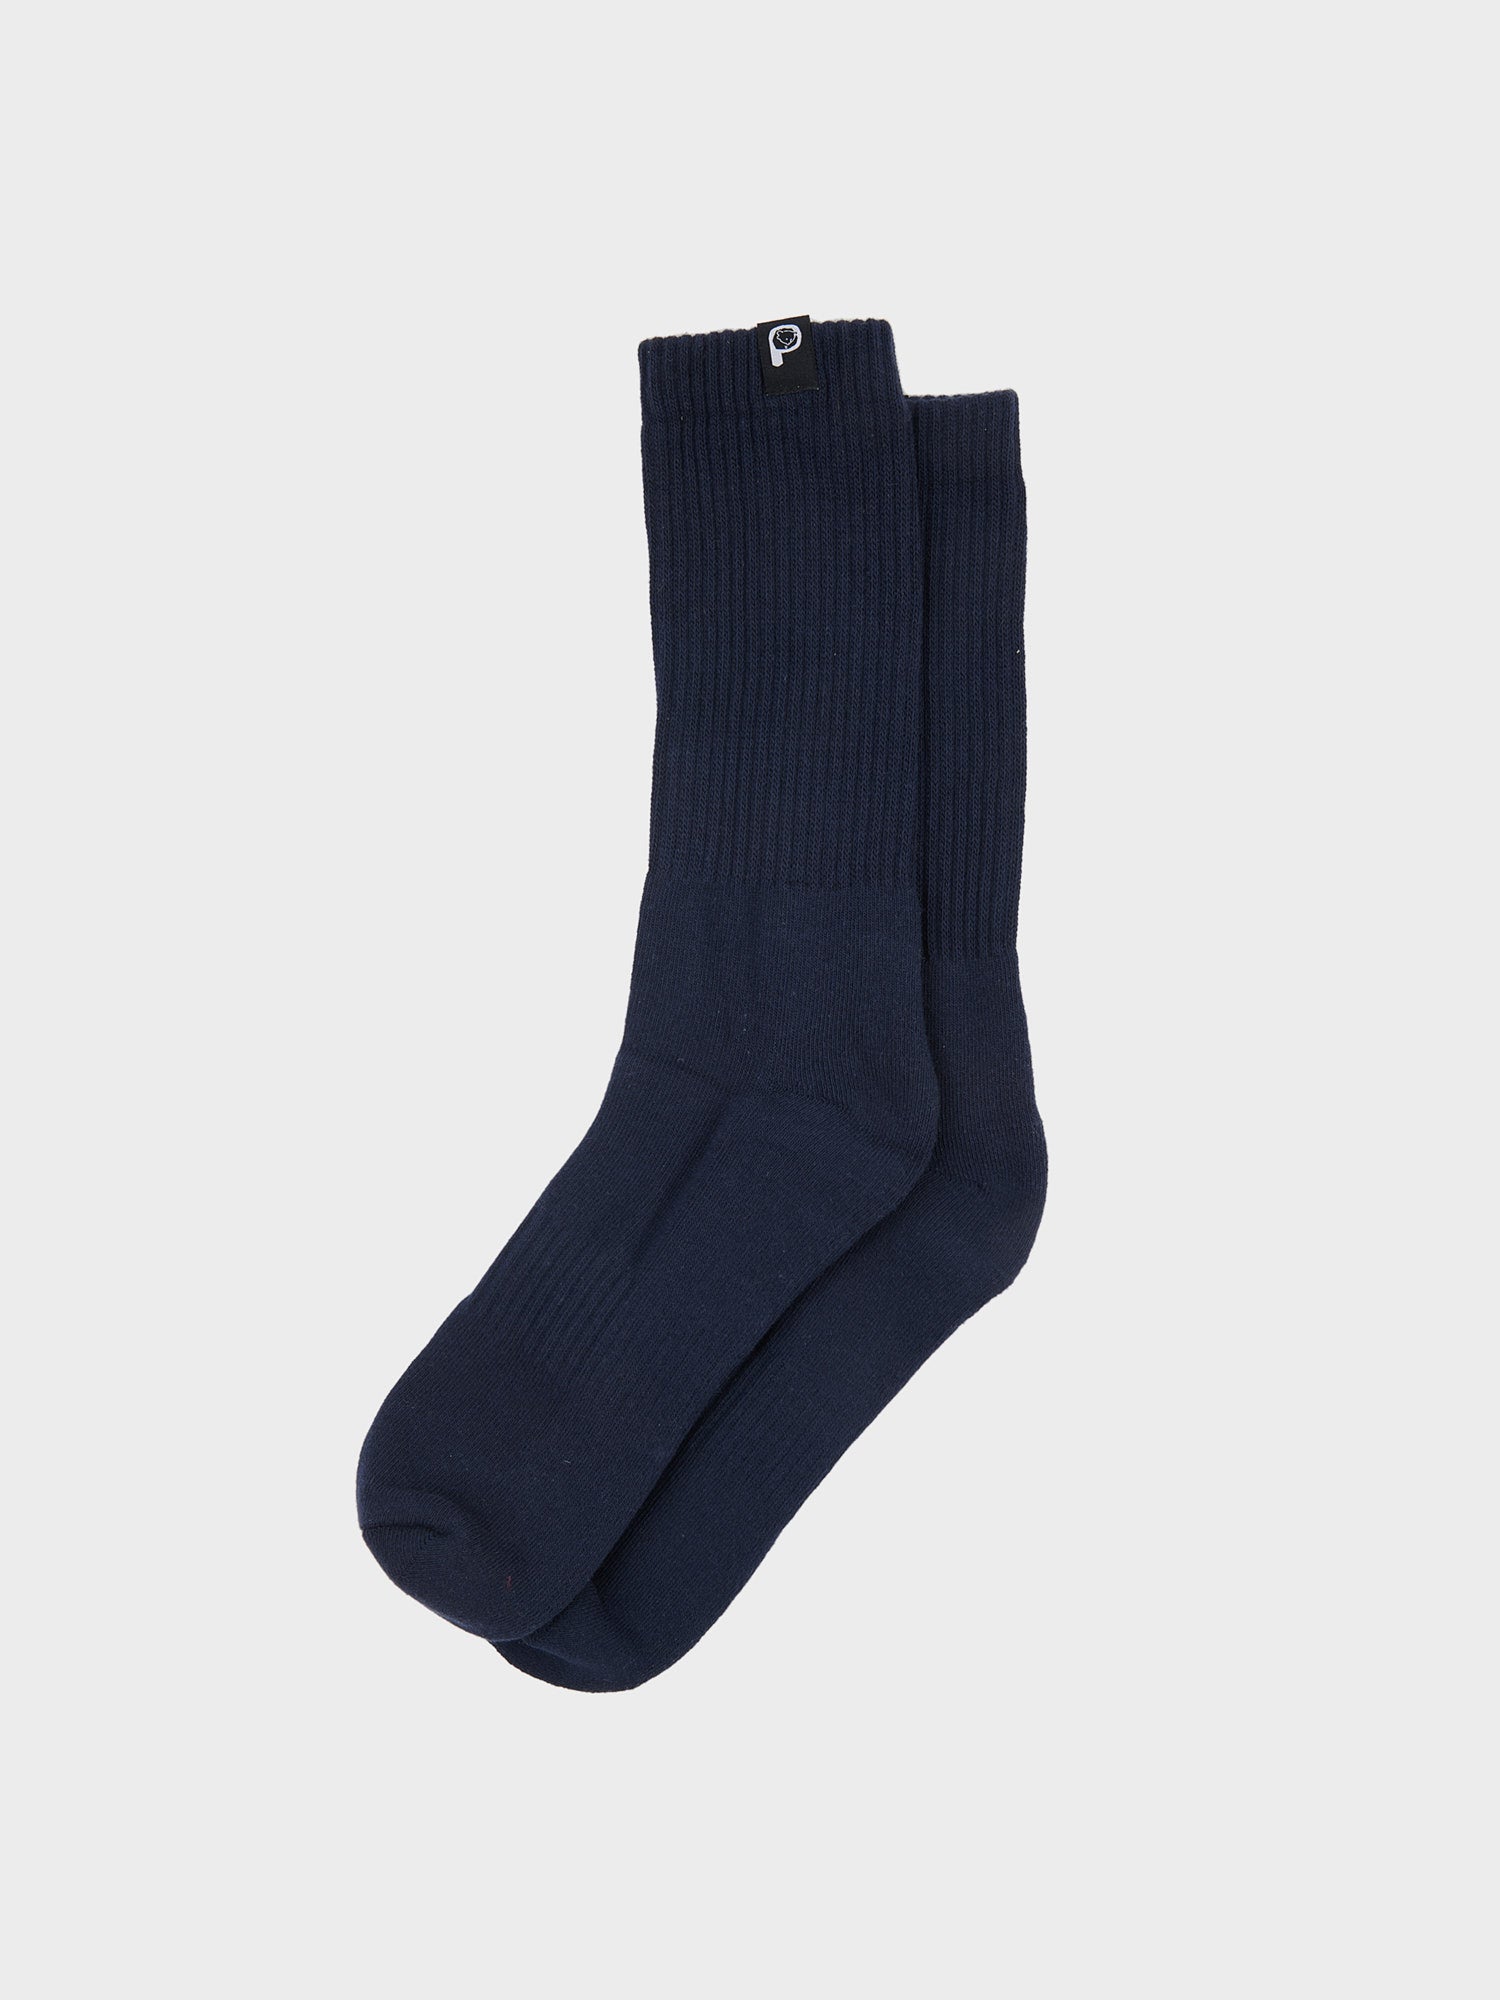 2 Pack Socks in Navy Blue